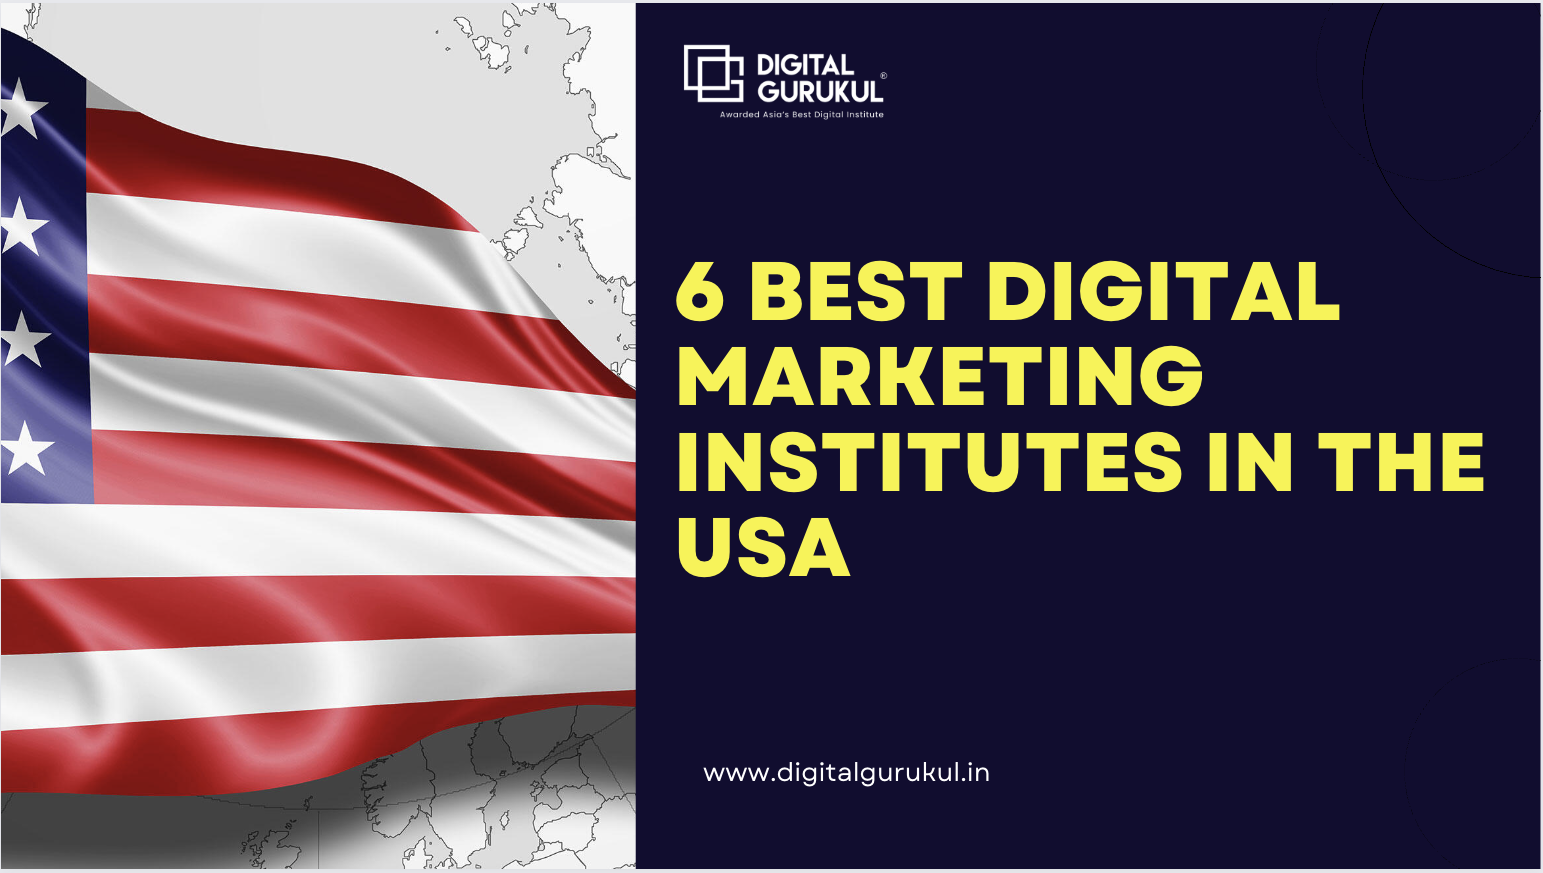 6 Best Digital Marketing Institutes in the USA